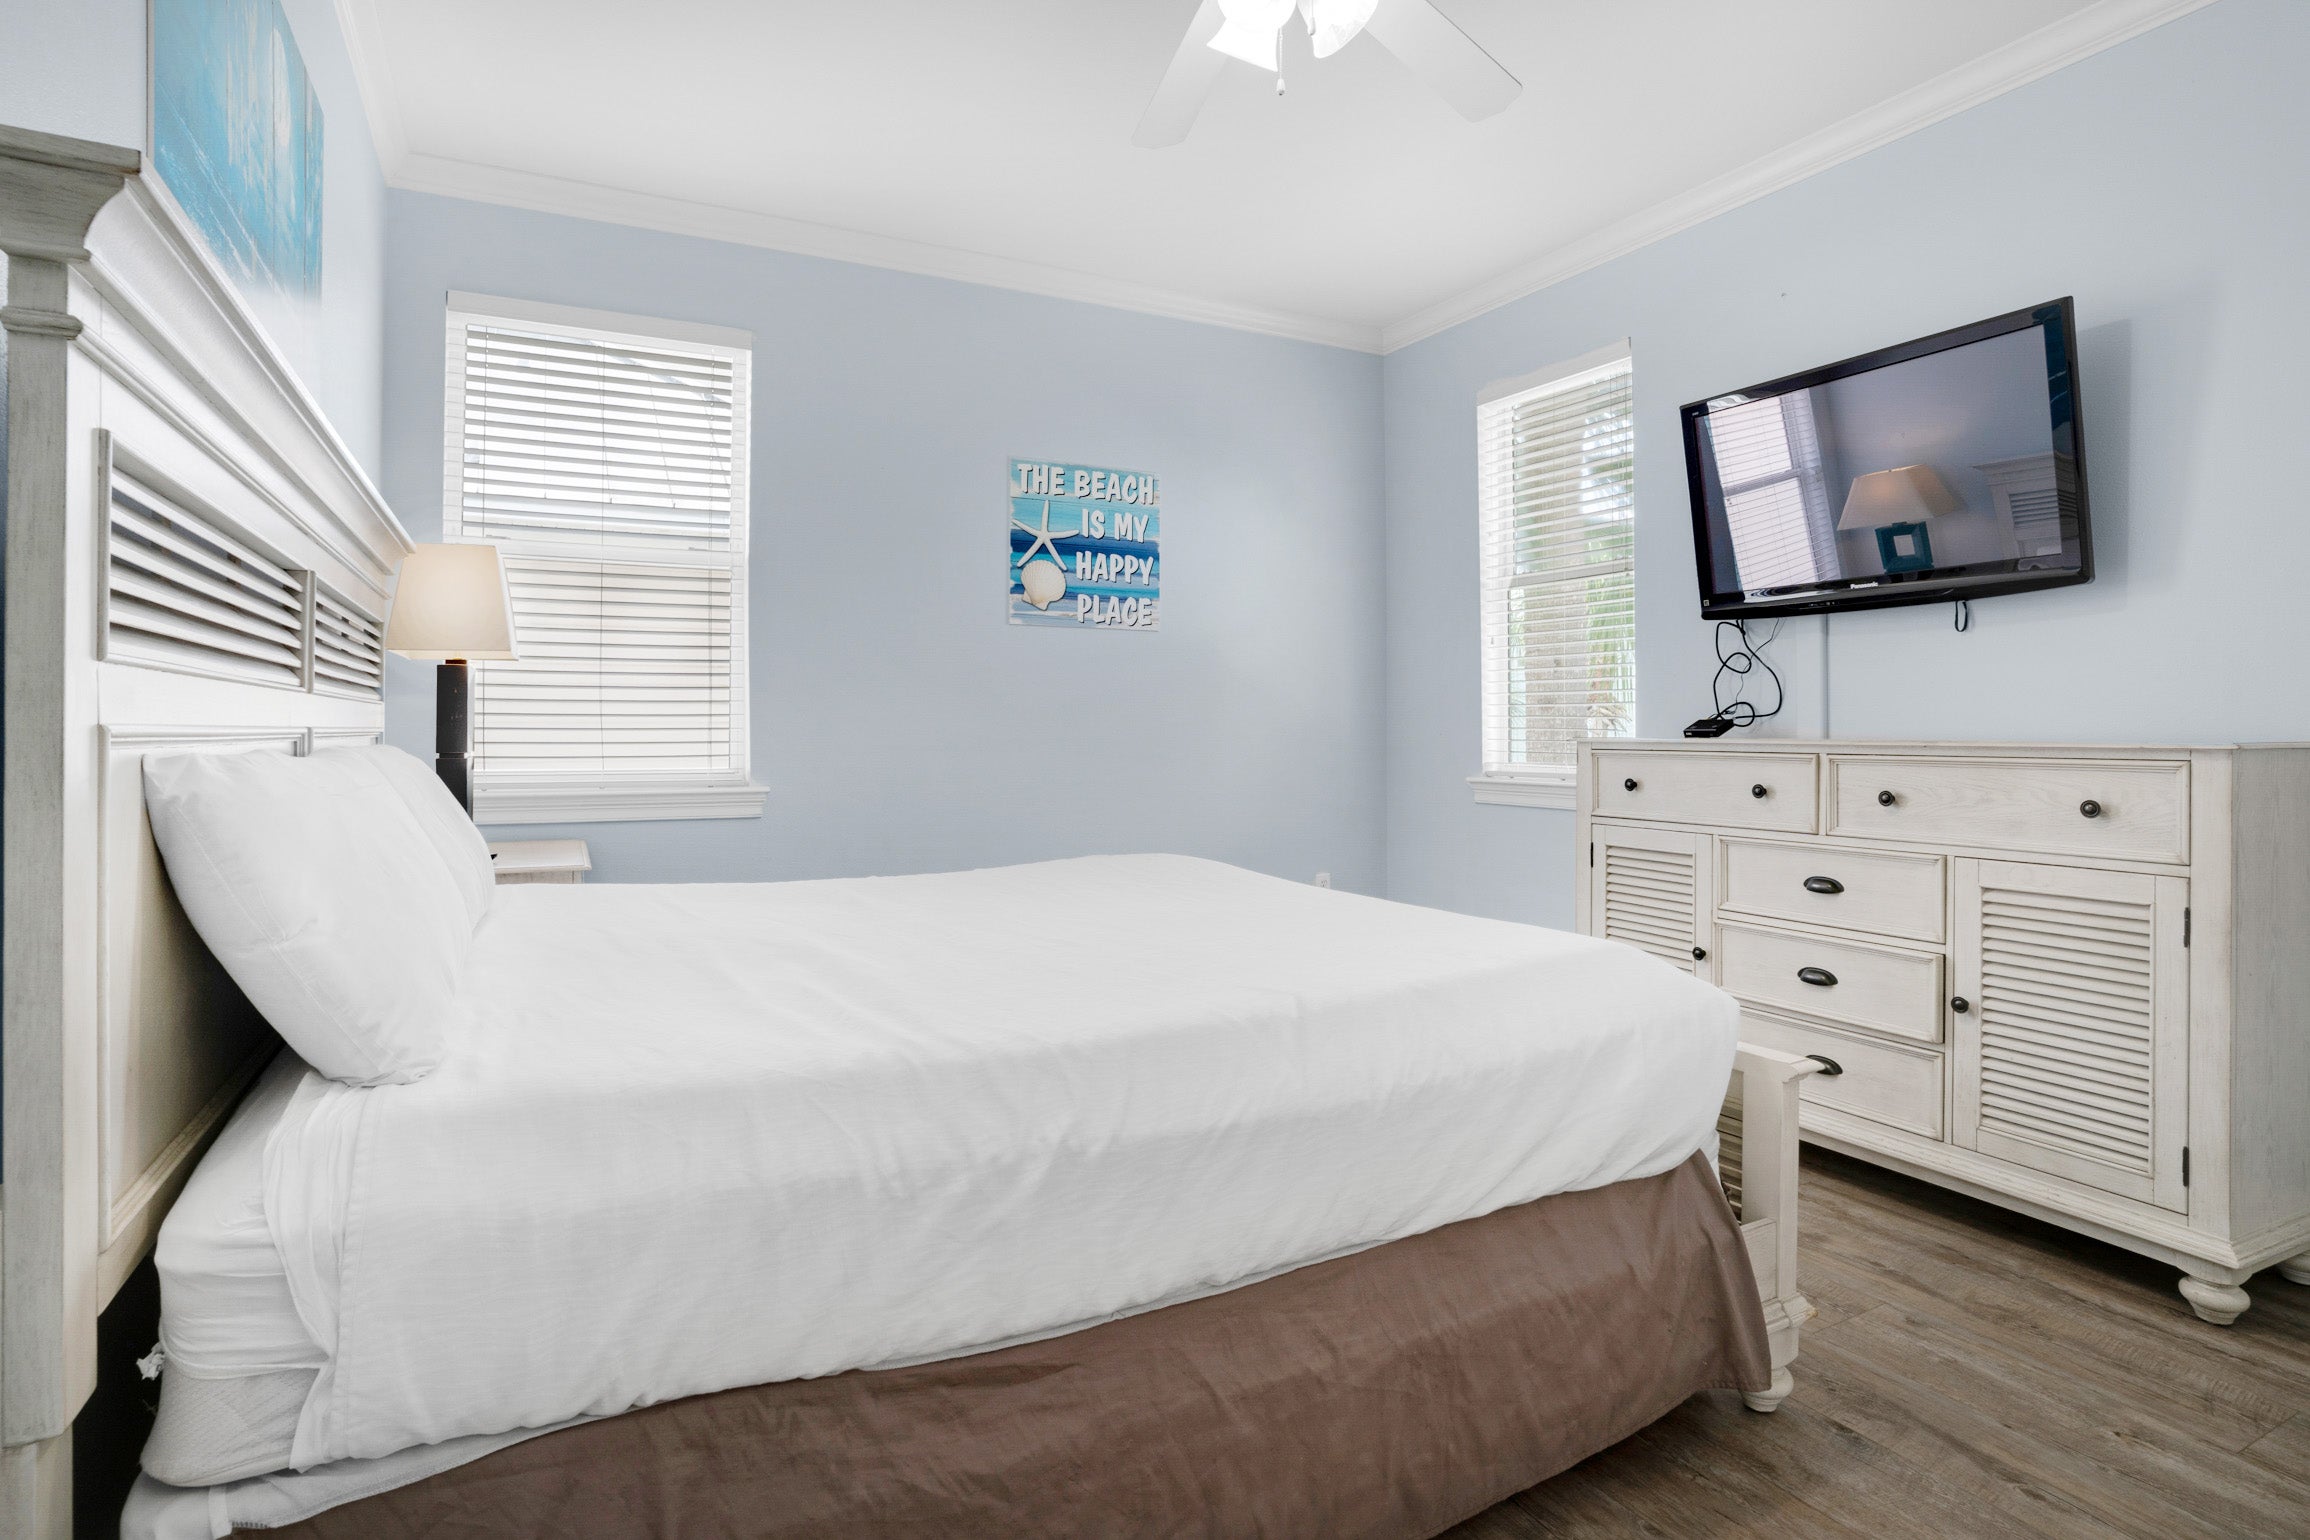 Guest bedroom with queen bed and flatscreen TV